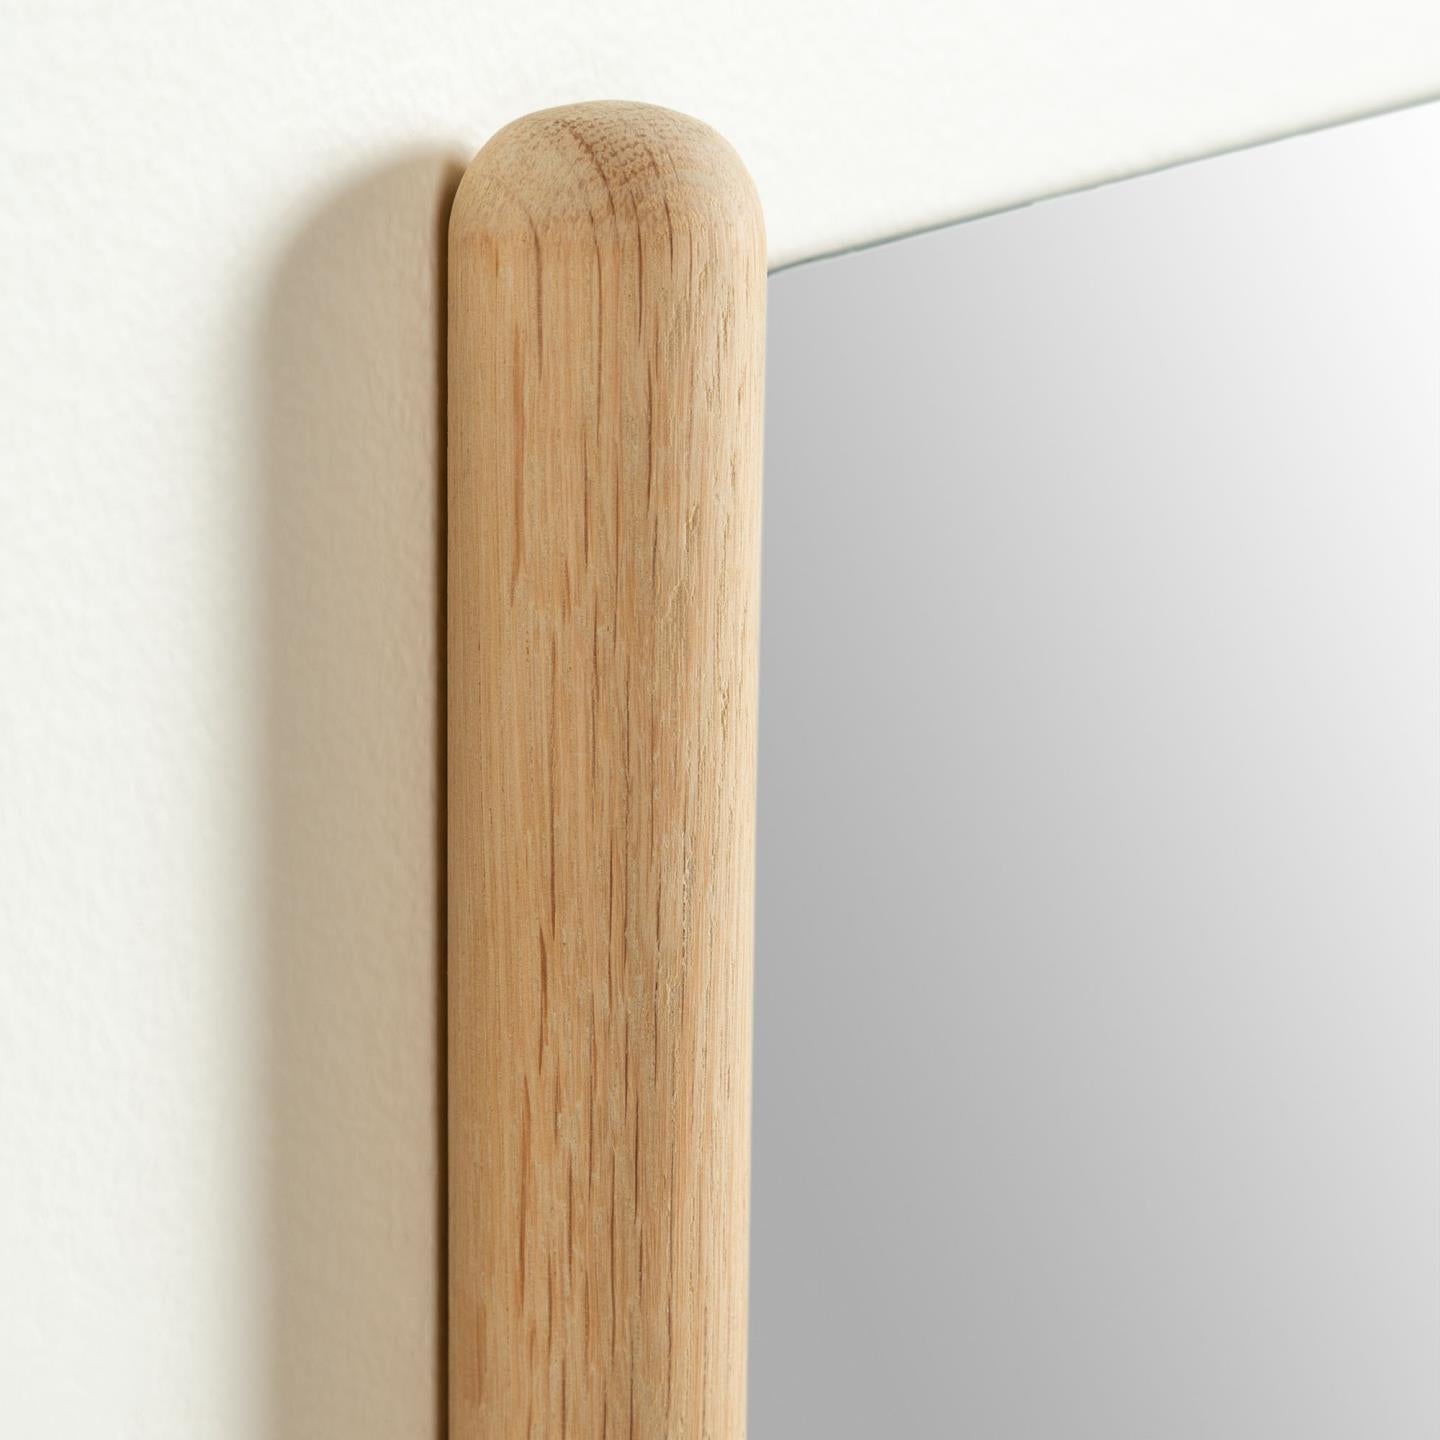 Kave Home Natane Spiegel aus Buchenholz 54 x 160 cm Natur- #AA4614M87